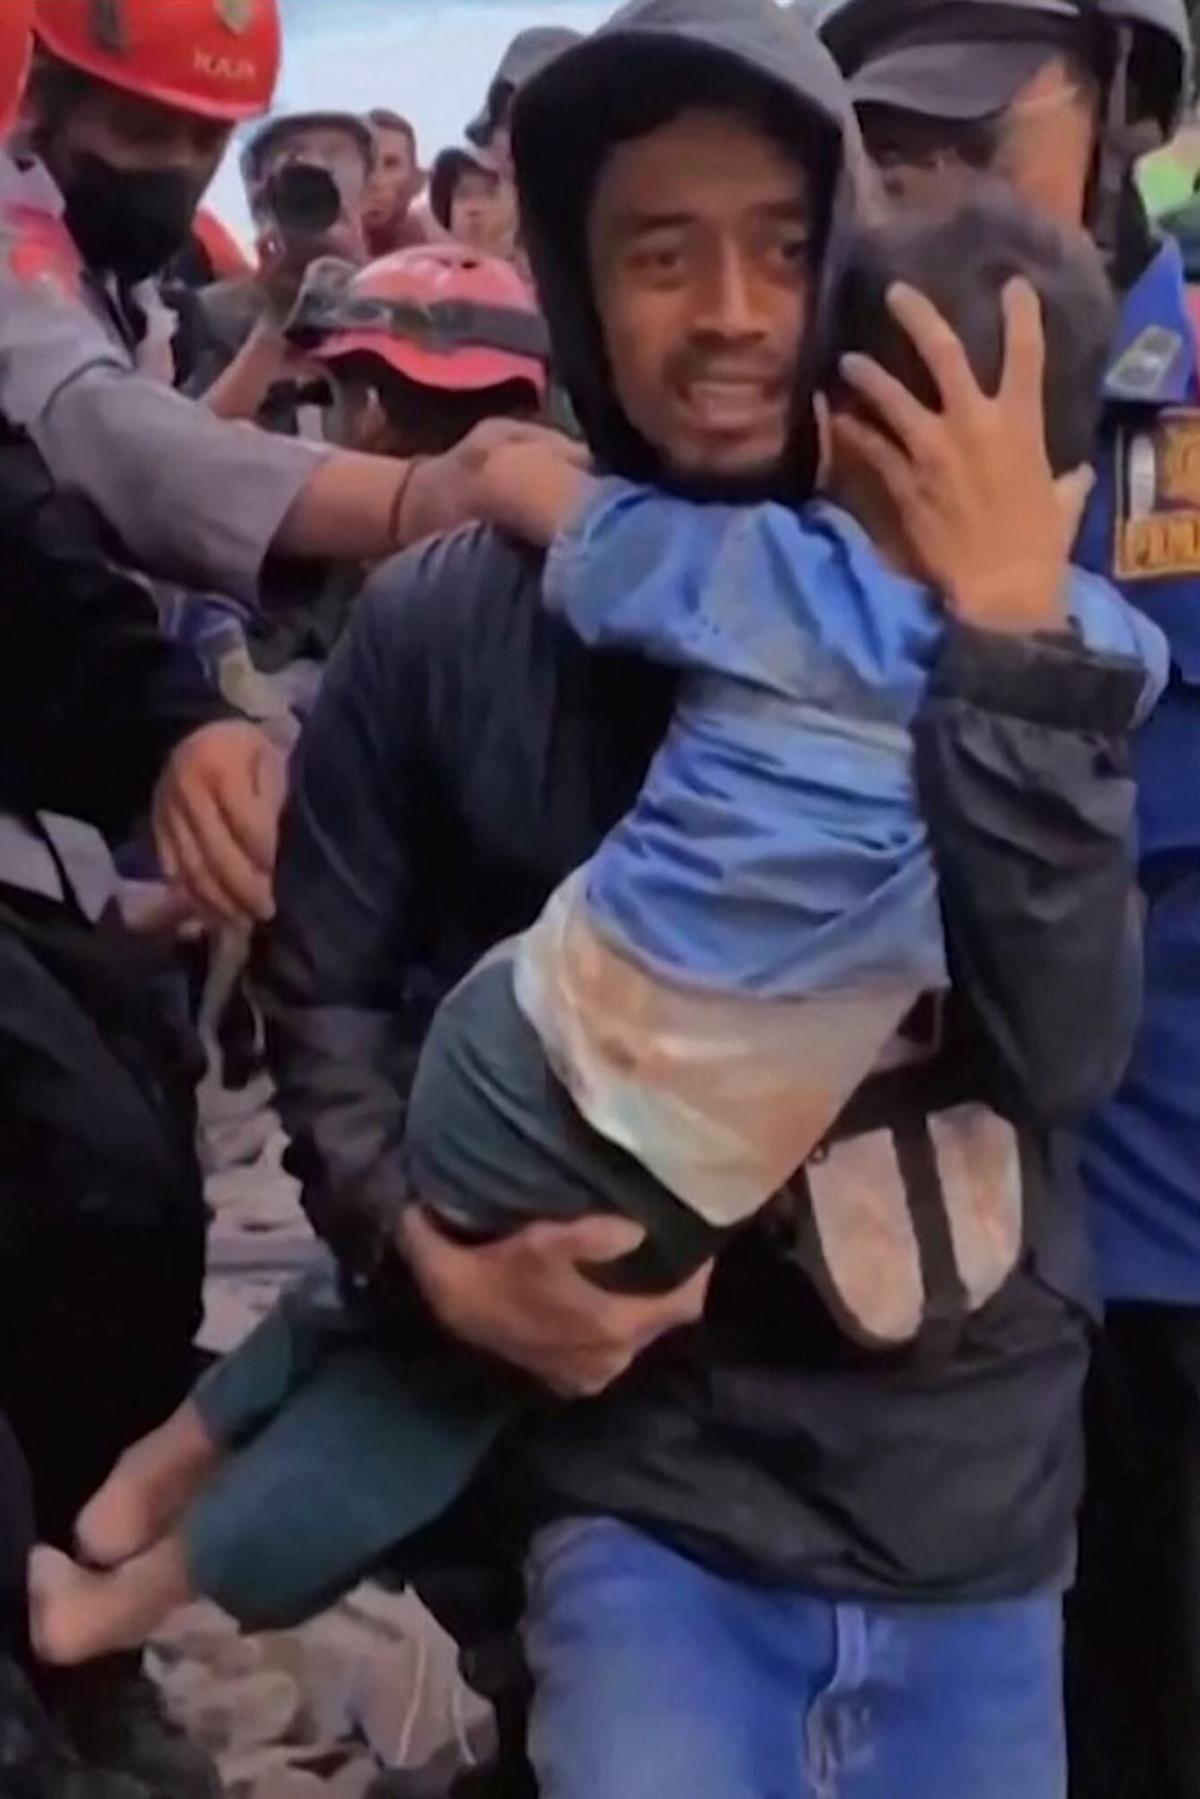 Tim penyelamat di Indonesia menarik seorang anak laki-laki berusia 6 tahun dari reruntuhan beberapa hari setelah gempa bumi yang menewaskan sedikitnya 270 orang.